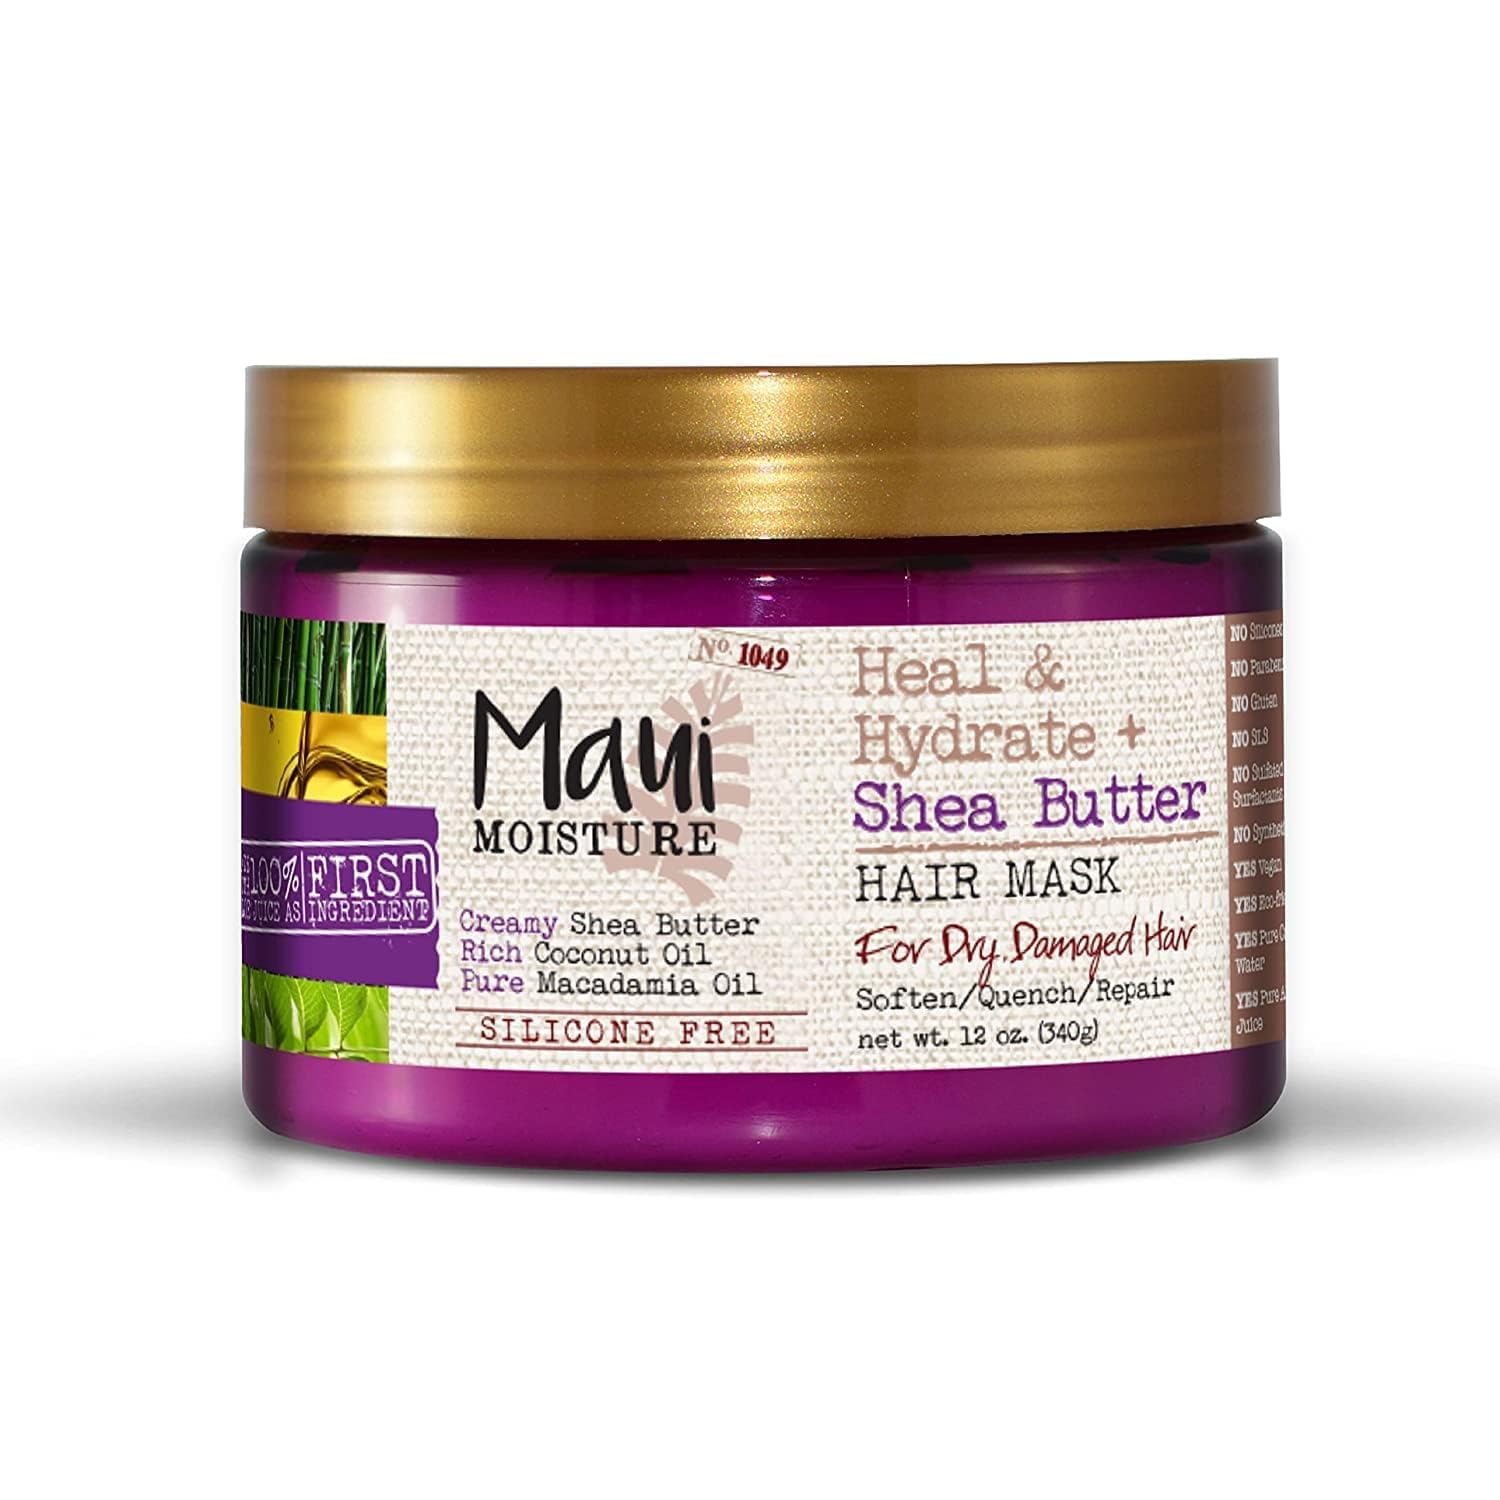 Maui Moisture Heal u0026amp; Hydrate + Shea Butter Hair Mask